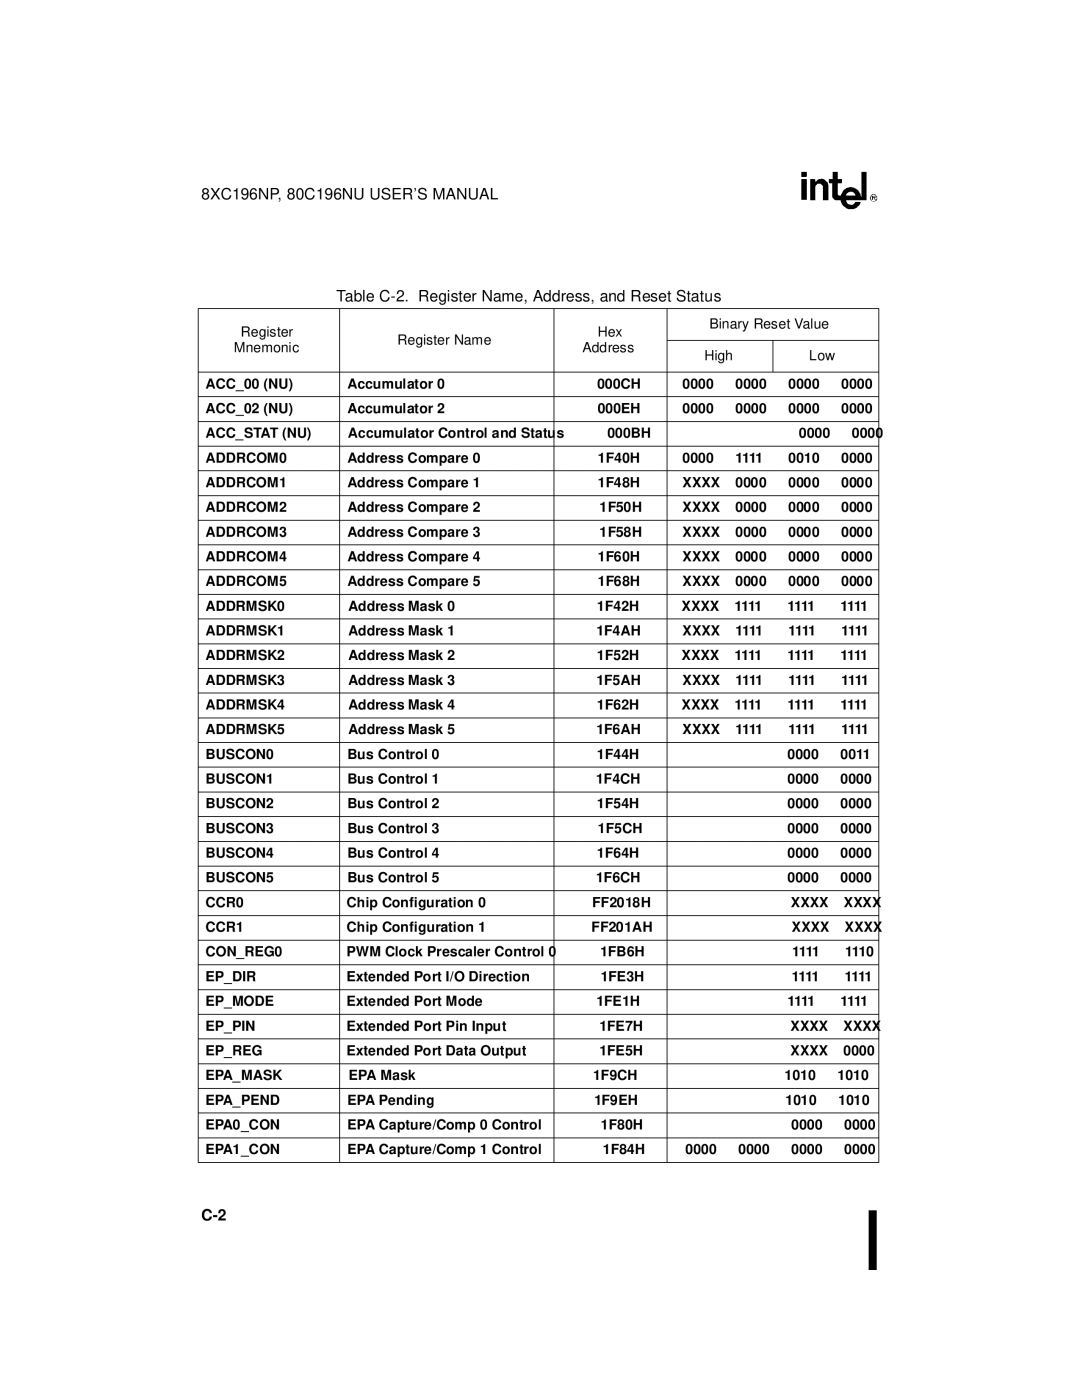 Intel 80C196NU, 8XC196NP, Microcontroller manual Table C-2. Register Name, Address, and Reset Status 